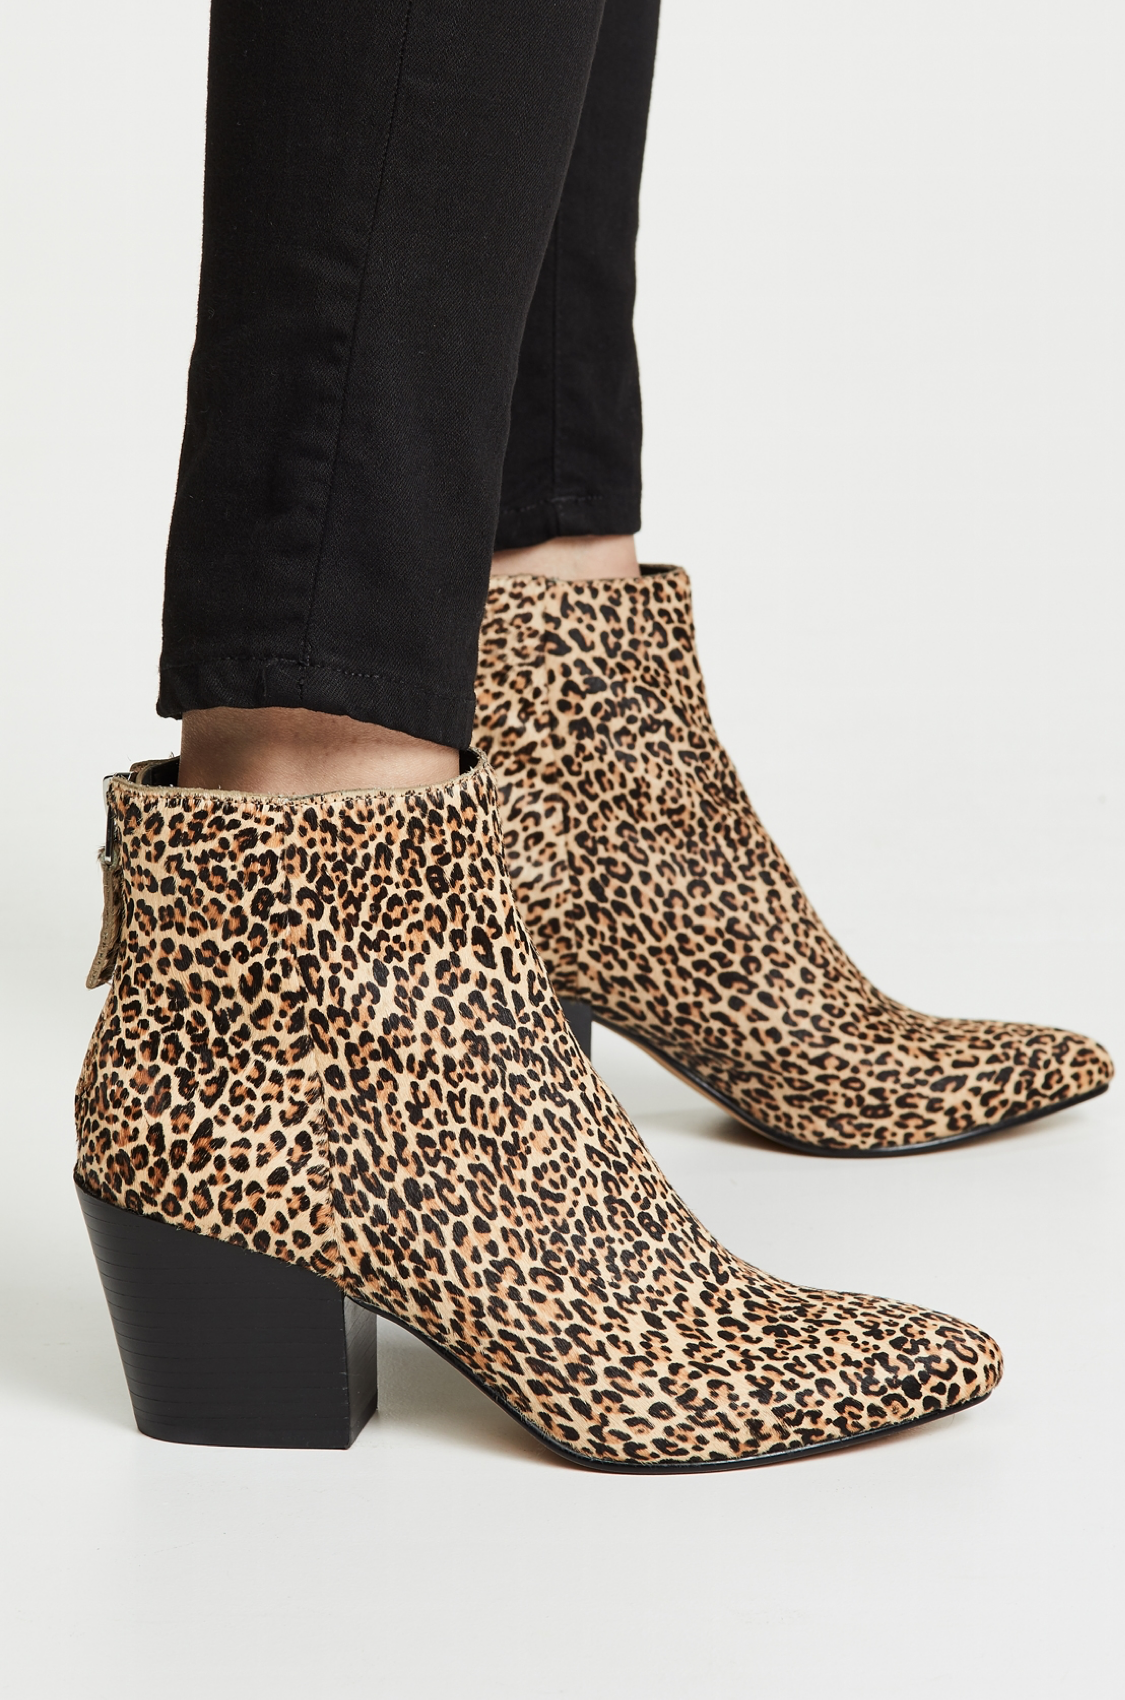 dolce vita leopard booties